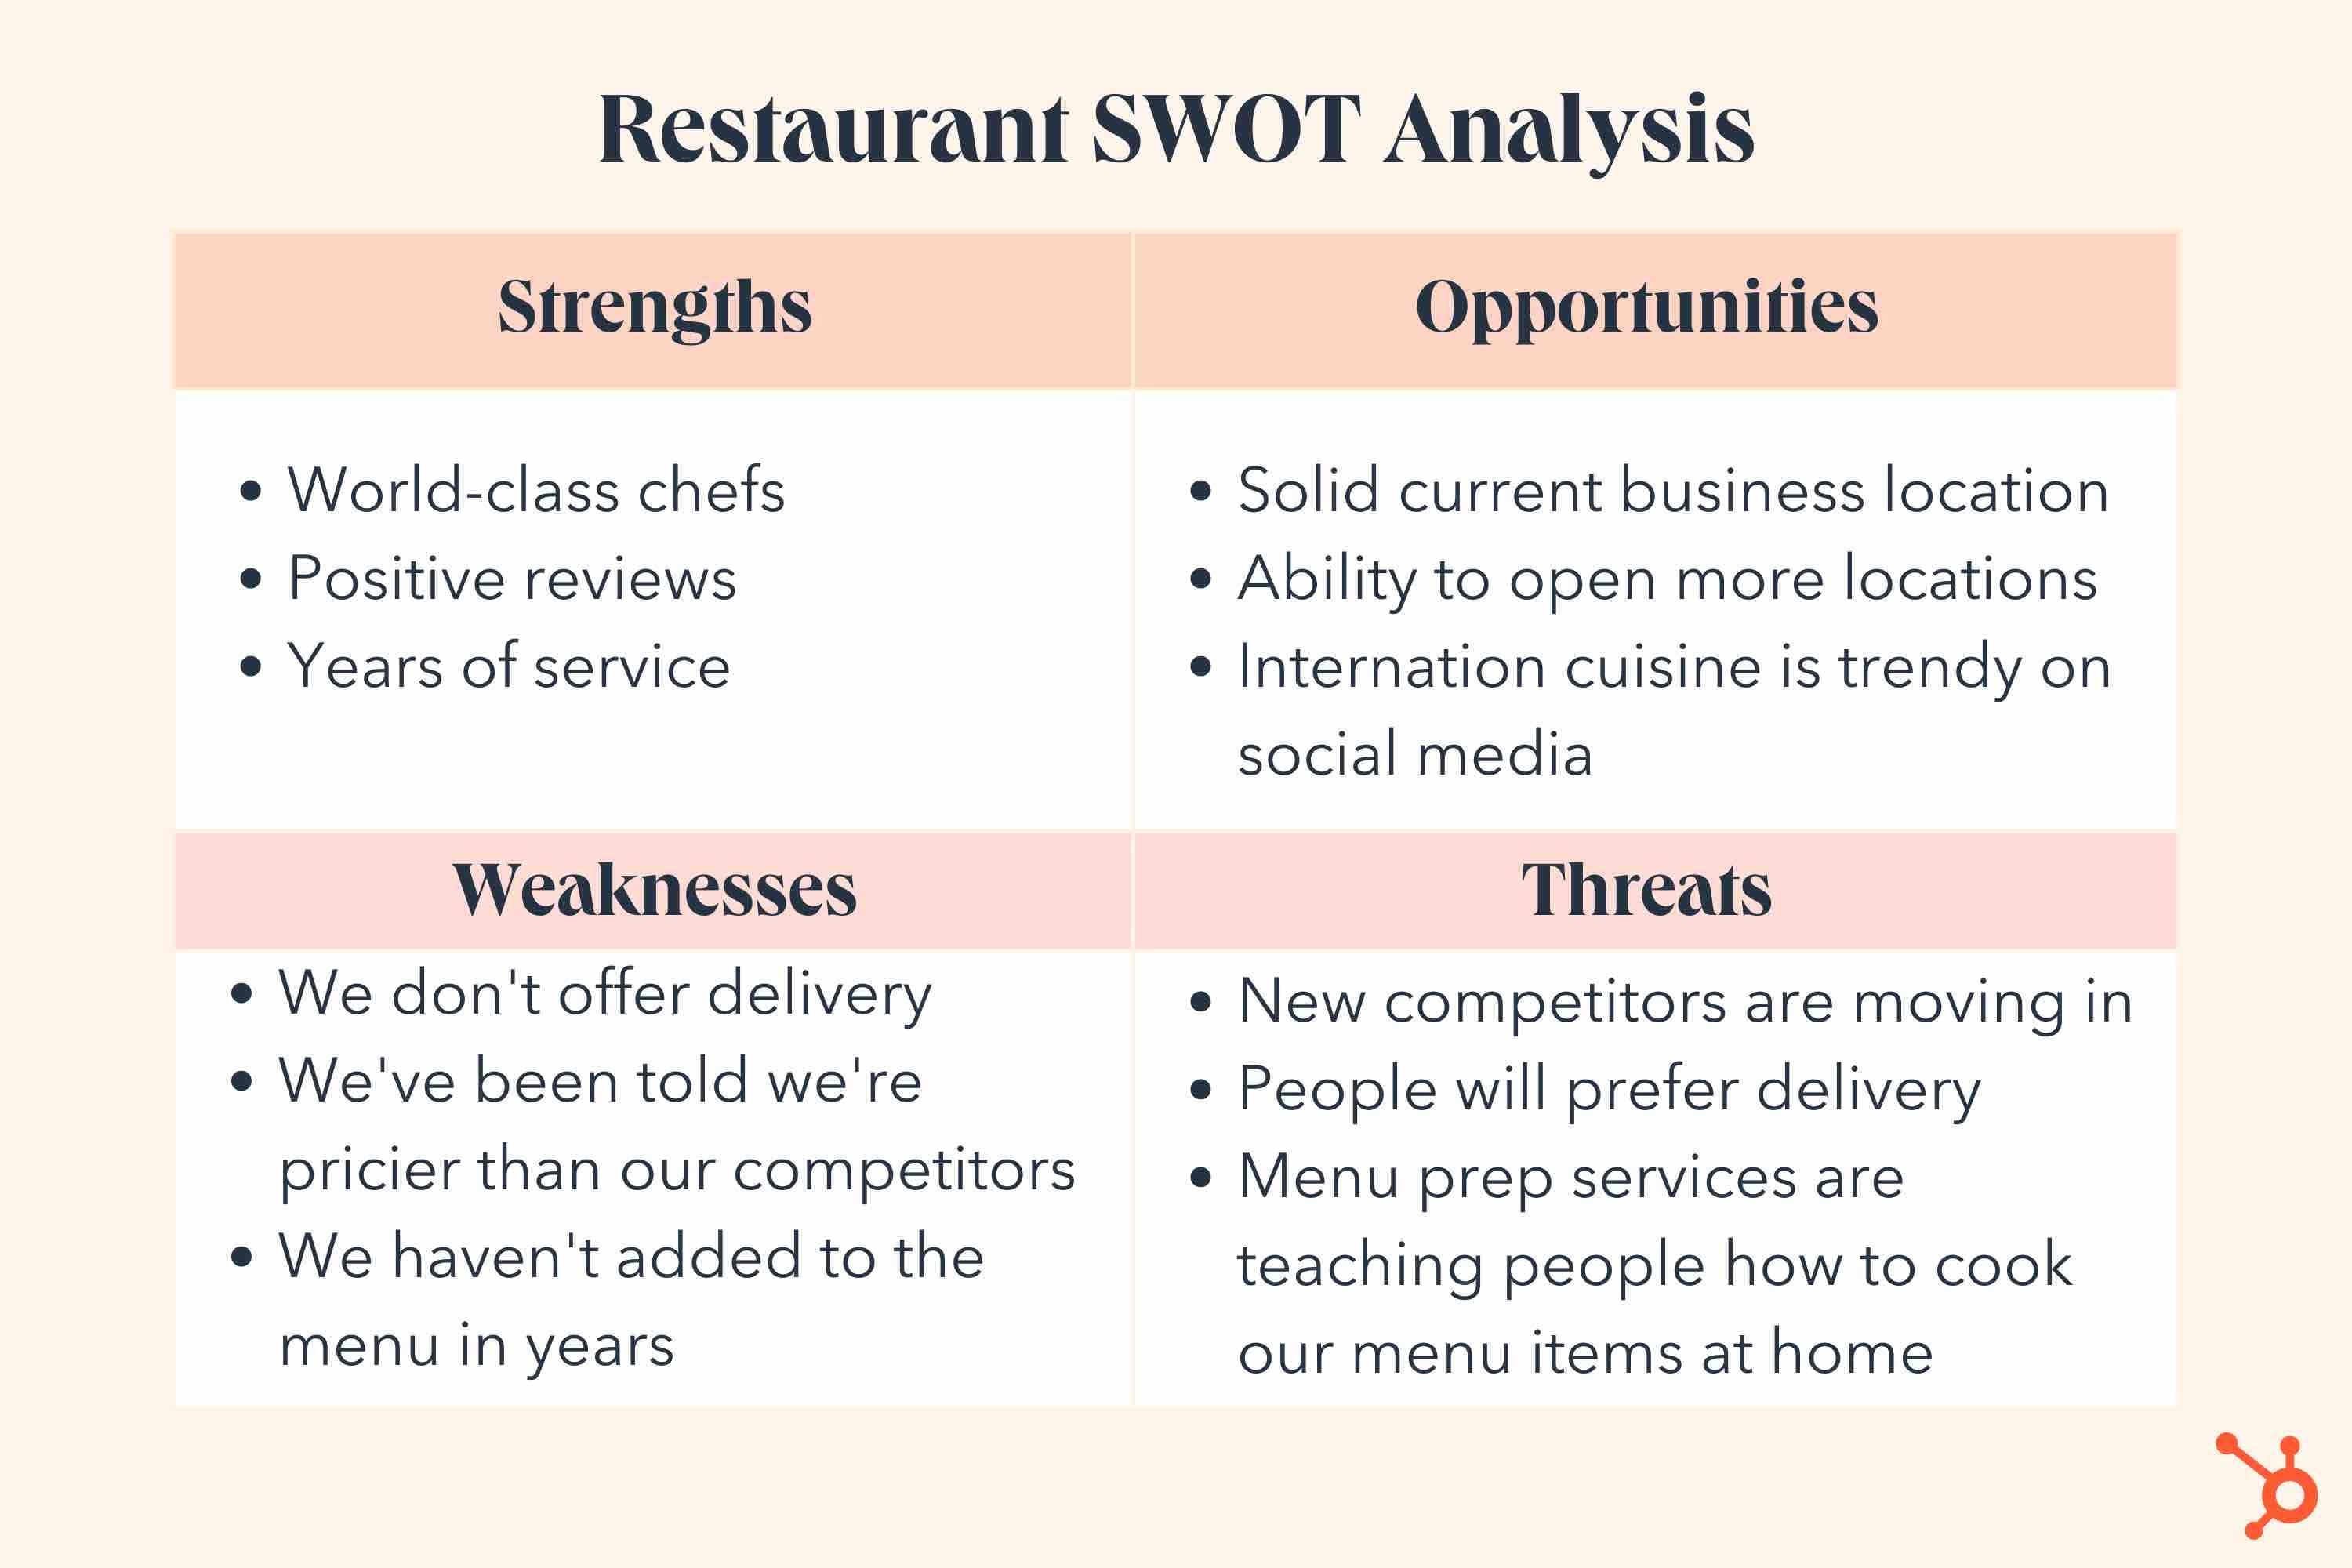 swot analysis of a restaurant business plan